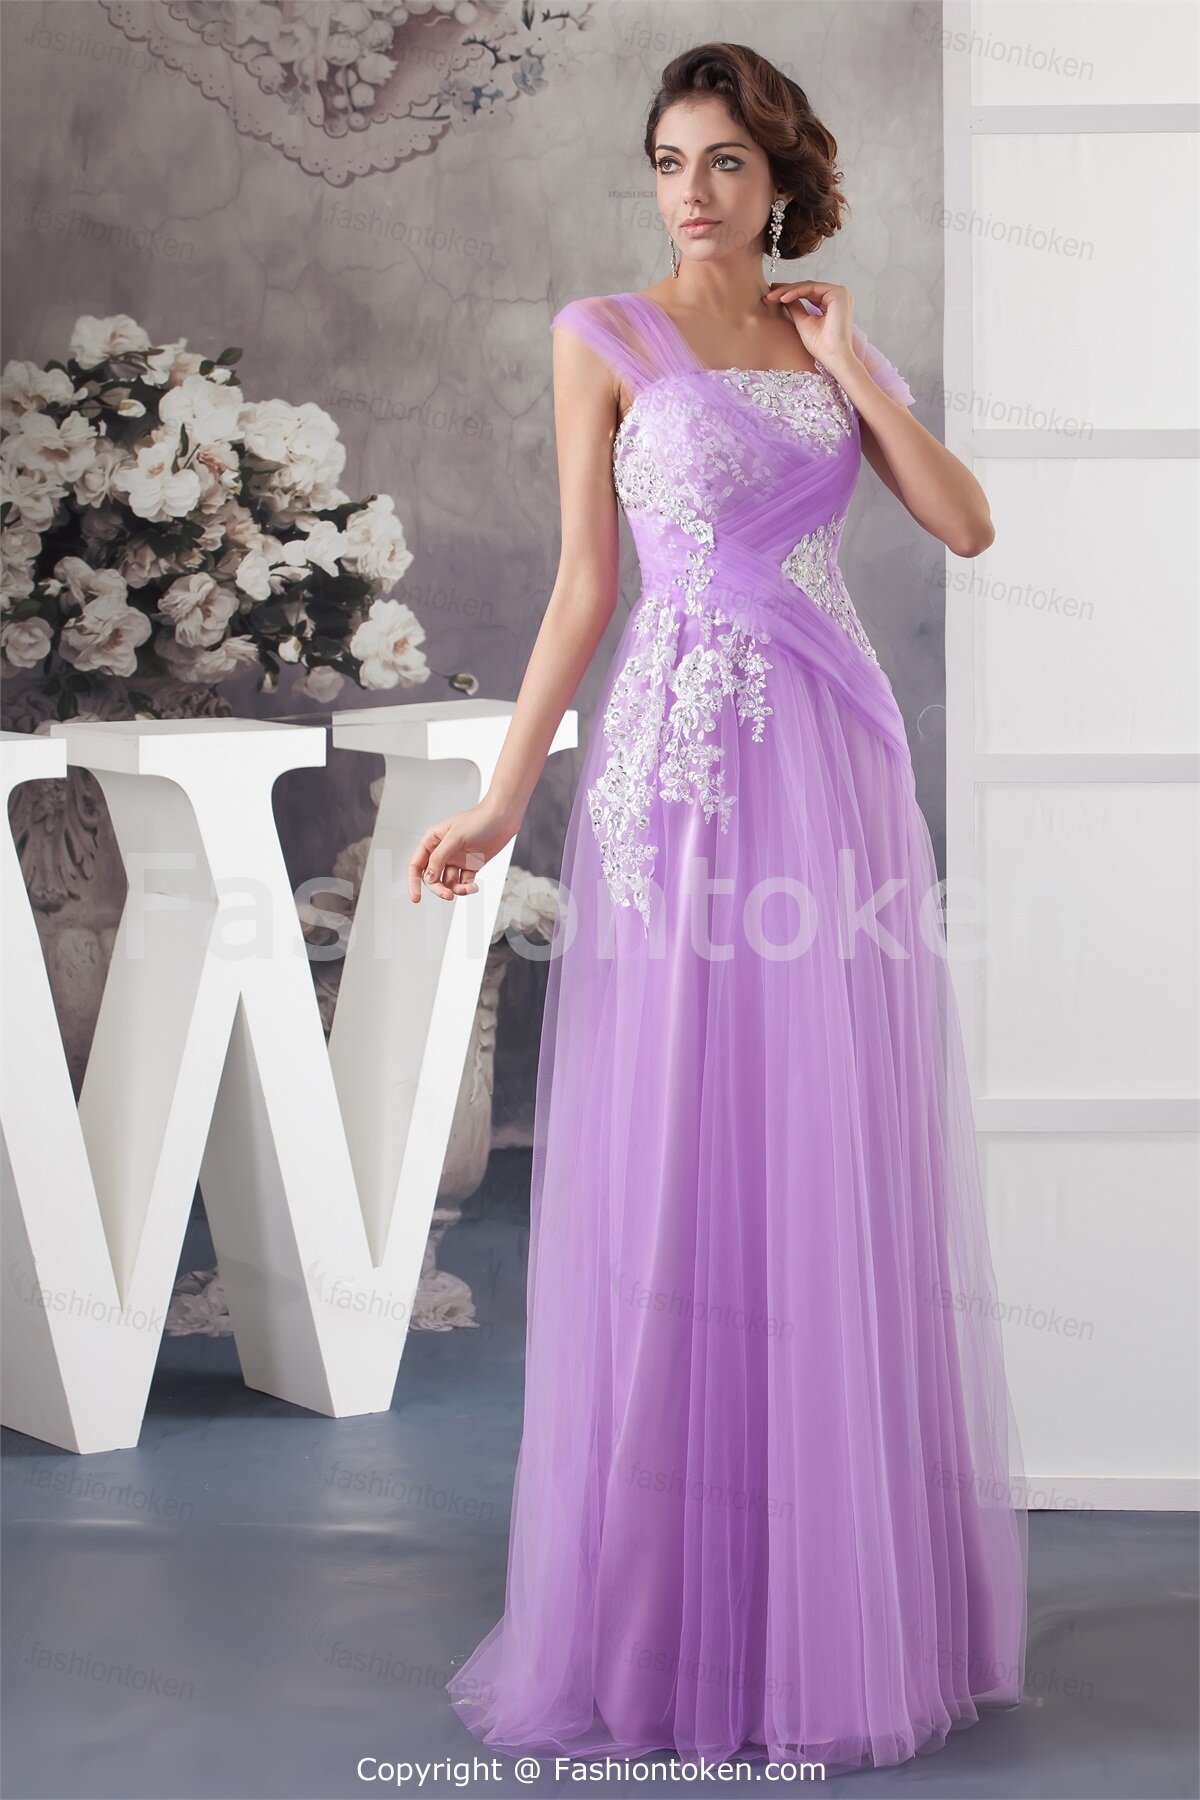 Light purple wedding dresses photo - 6